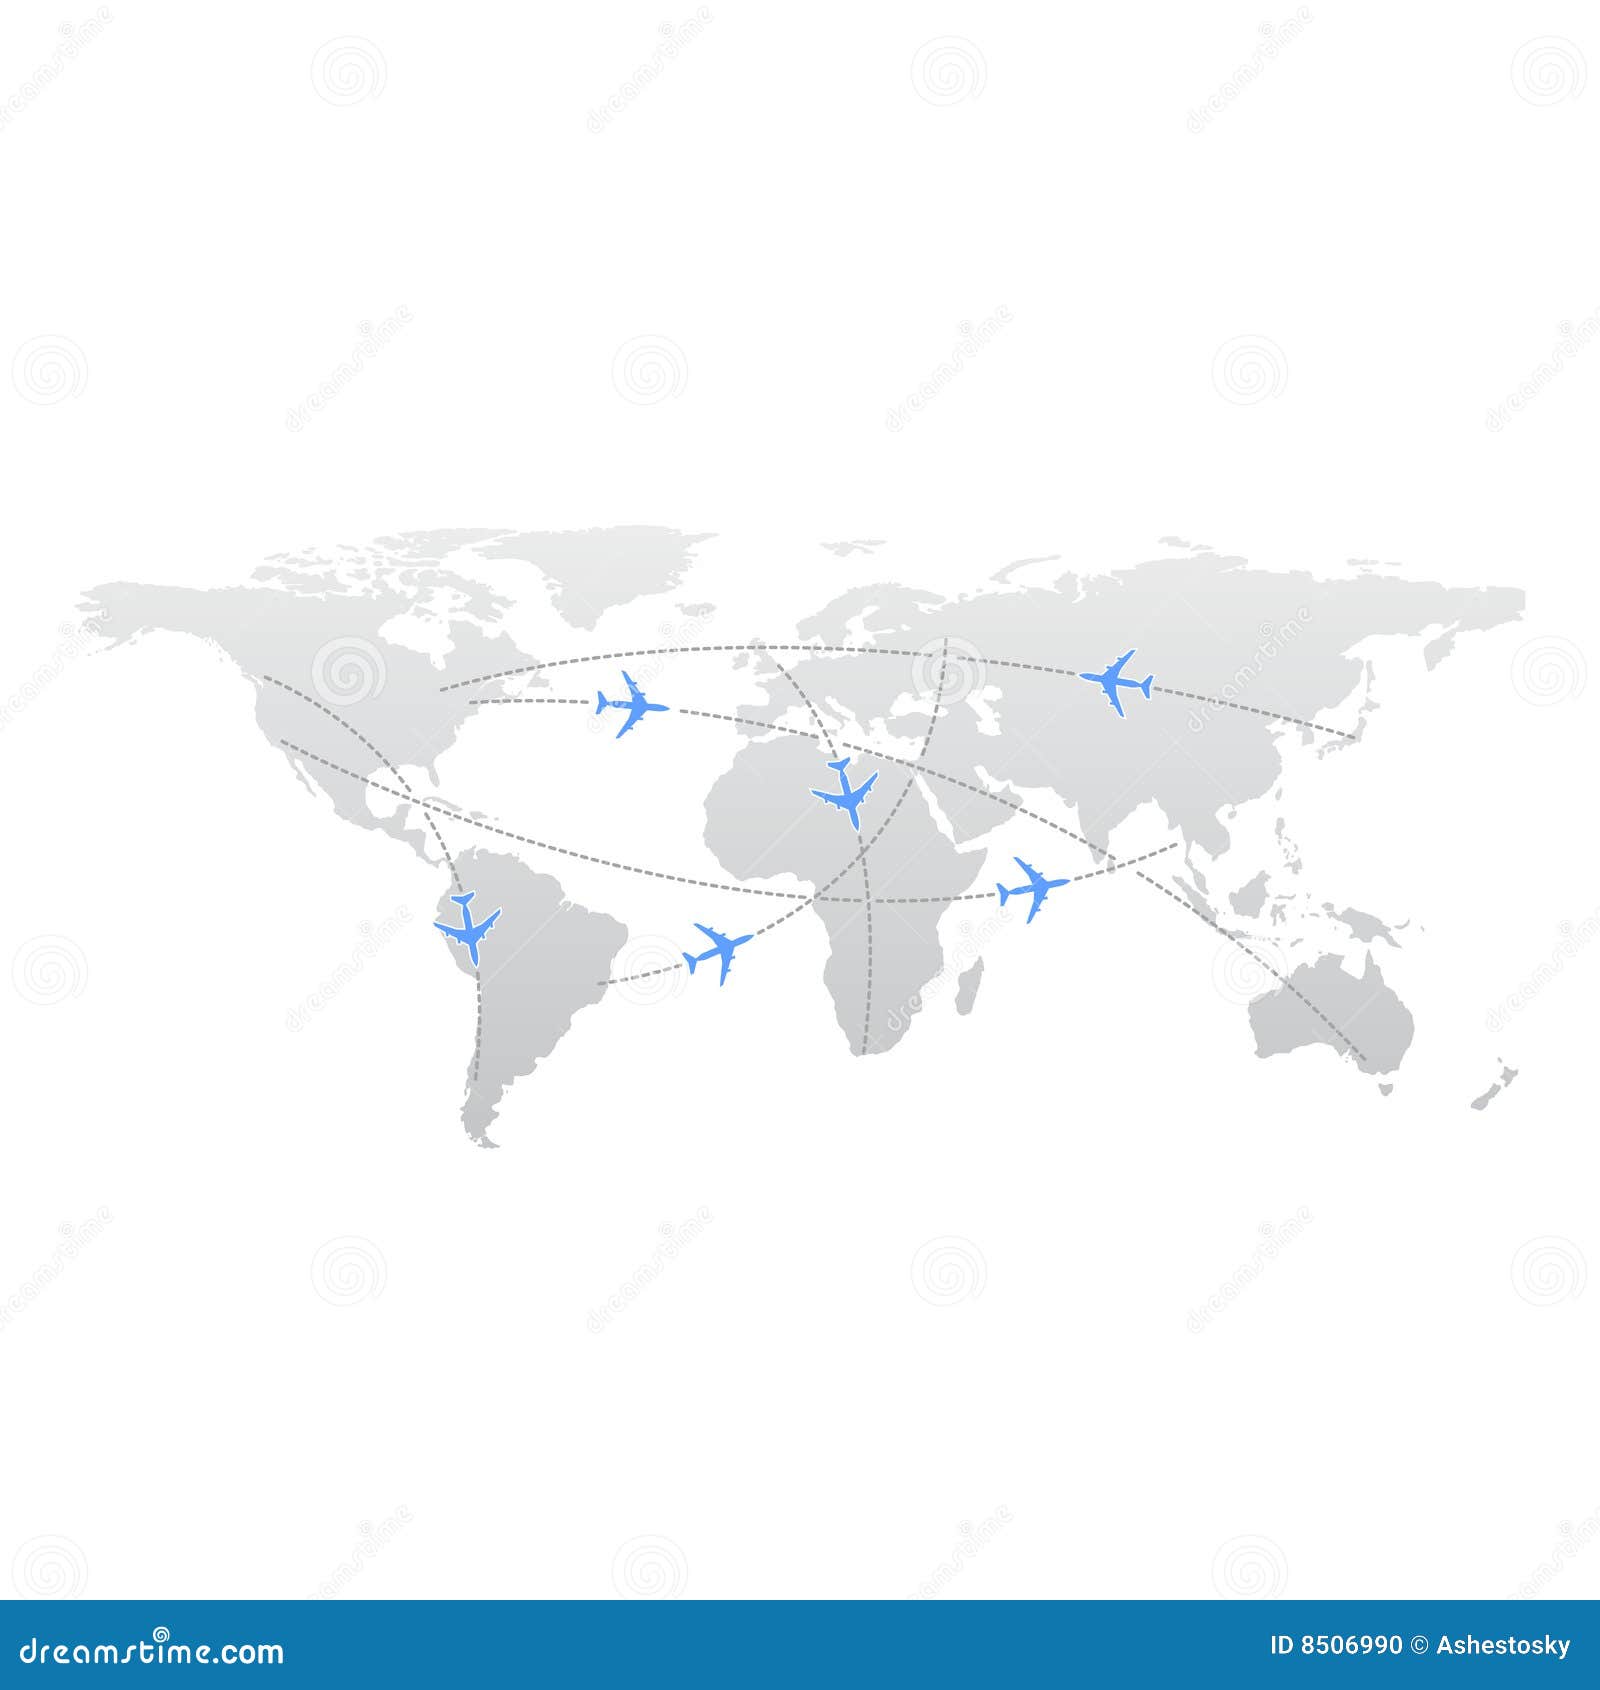 intercontinental flight routes map